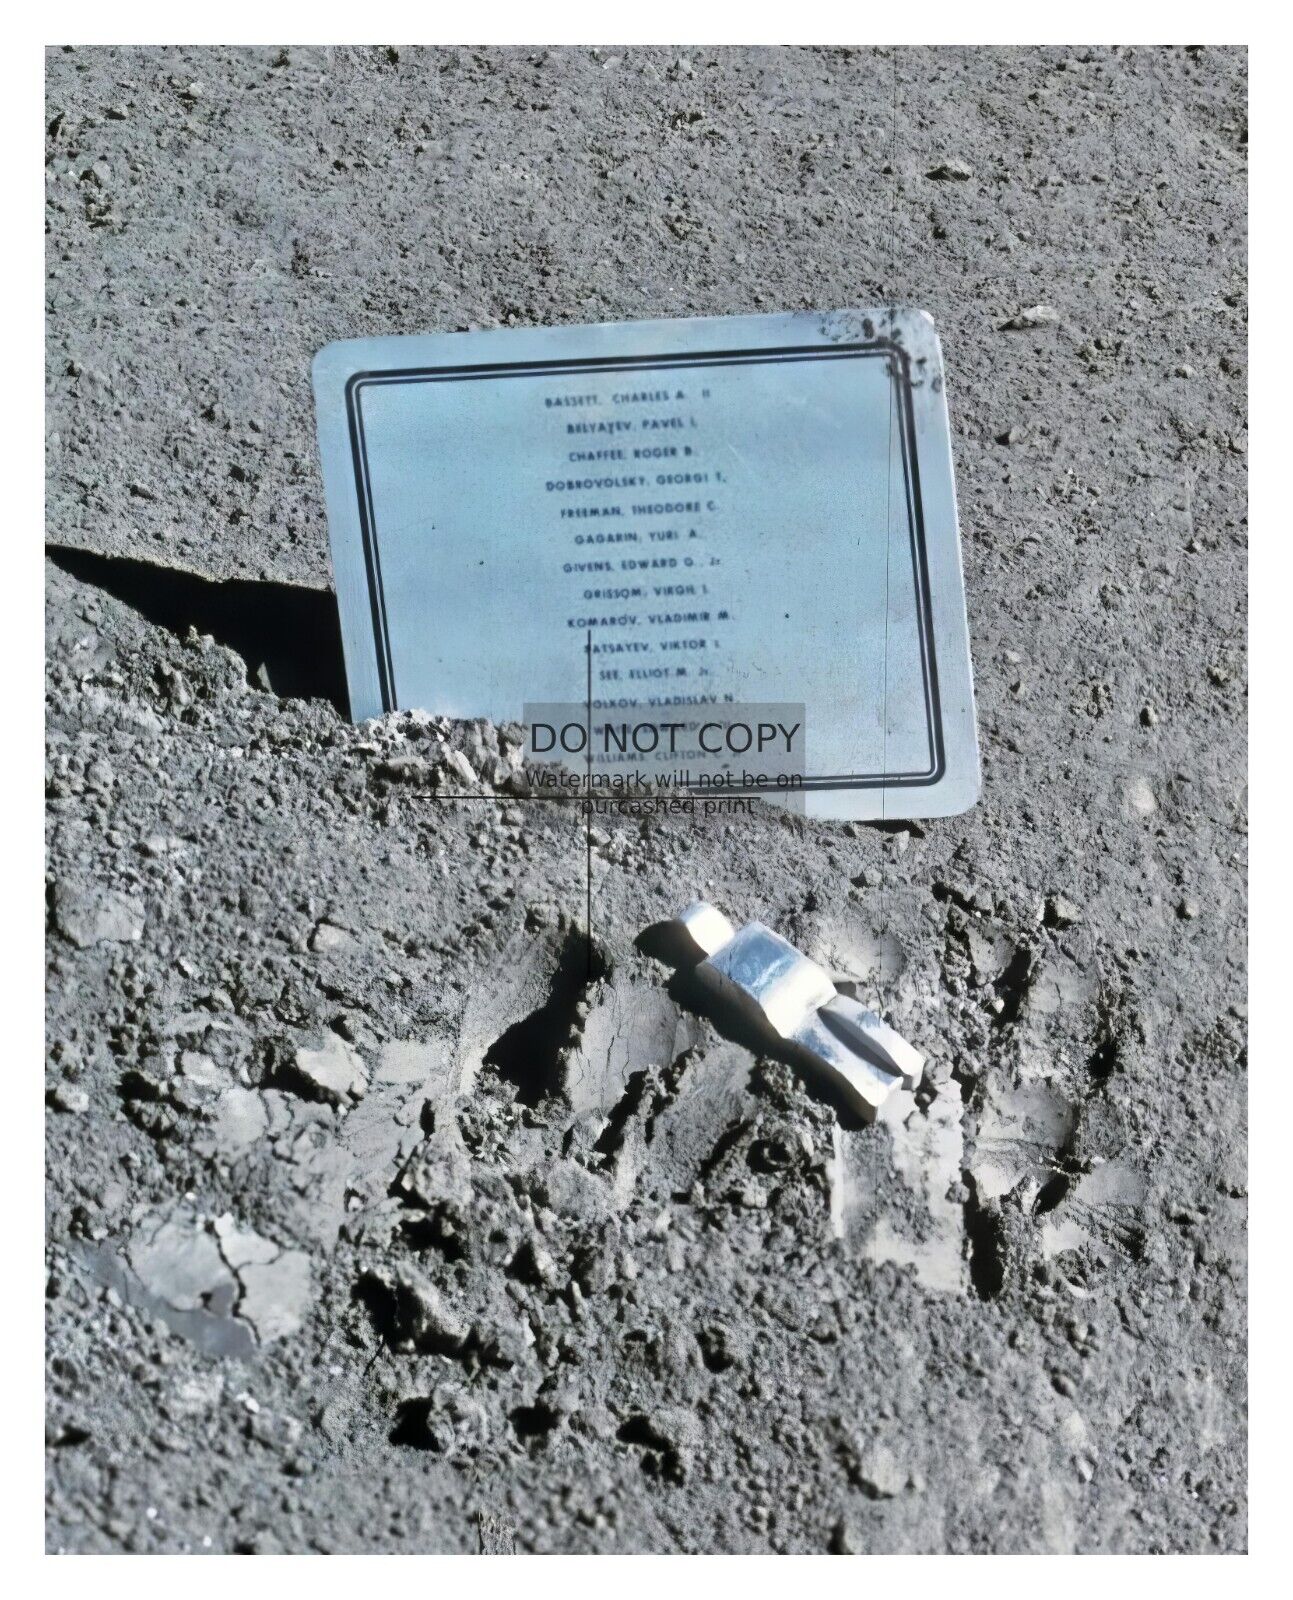 FALLEN ASTRONAUT PLAQUE LEFT ON MOON BY NASA APOLLO 15 CREW 8X10 PHOTO